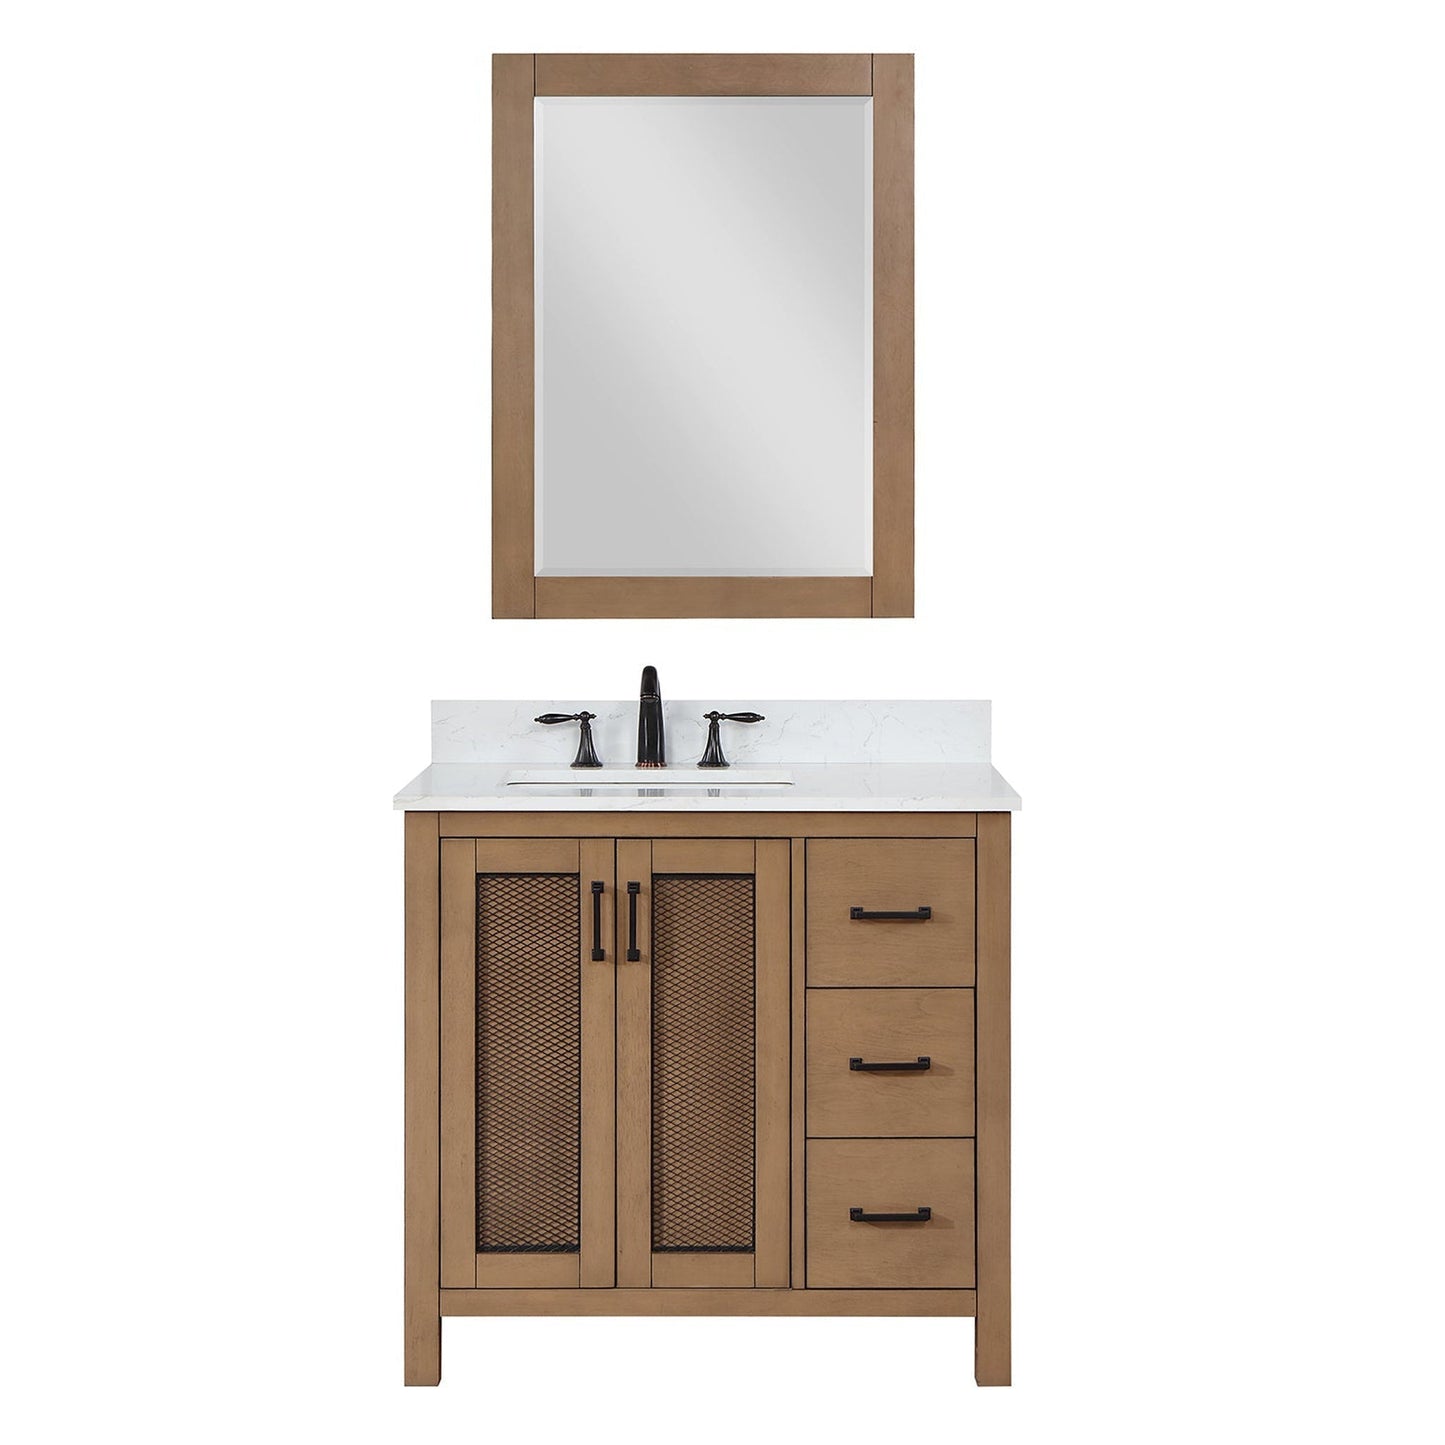 Altair Hadiya 36" Single Brown Pine Freestanding Bathroom Vanity Set With Mirror, Elegant Aosta White Composite Stone Top, Rectangular Undermount Ceramic Sink, Overflow, and Backsplash